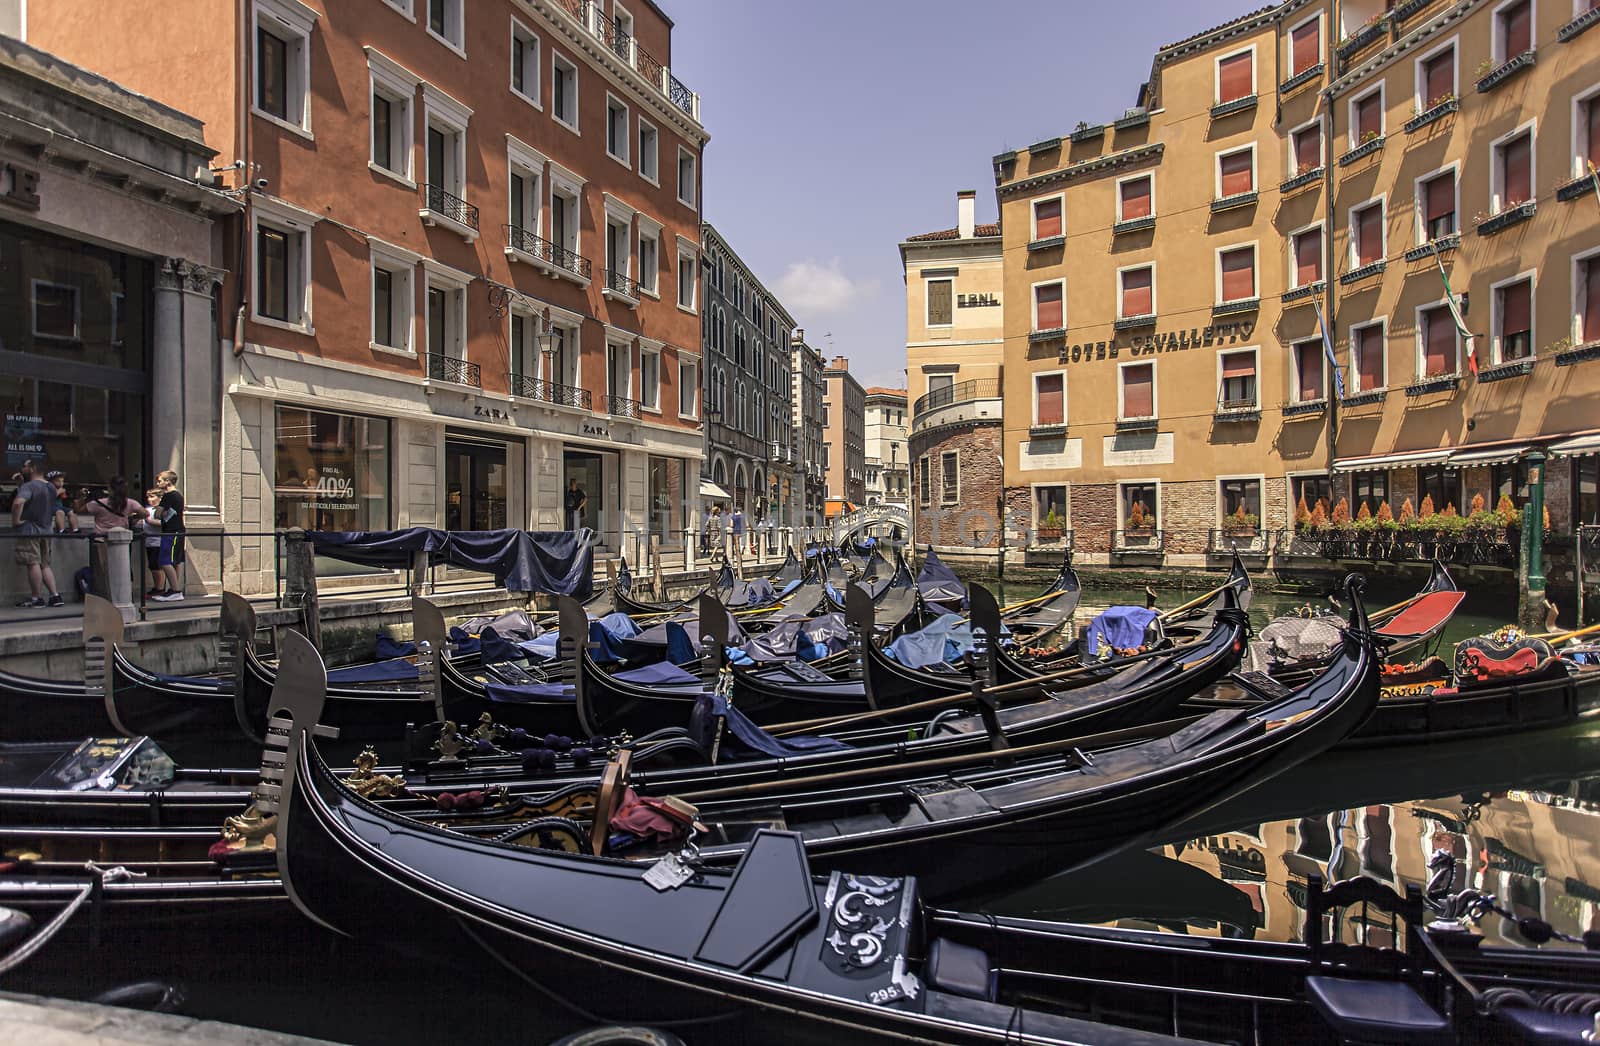 VENICE, ITALY 2 JULY 2020: Gondolas in Venice